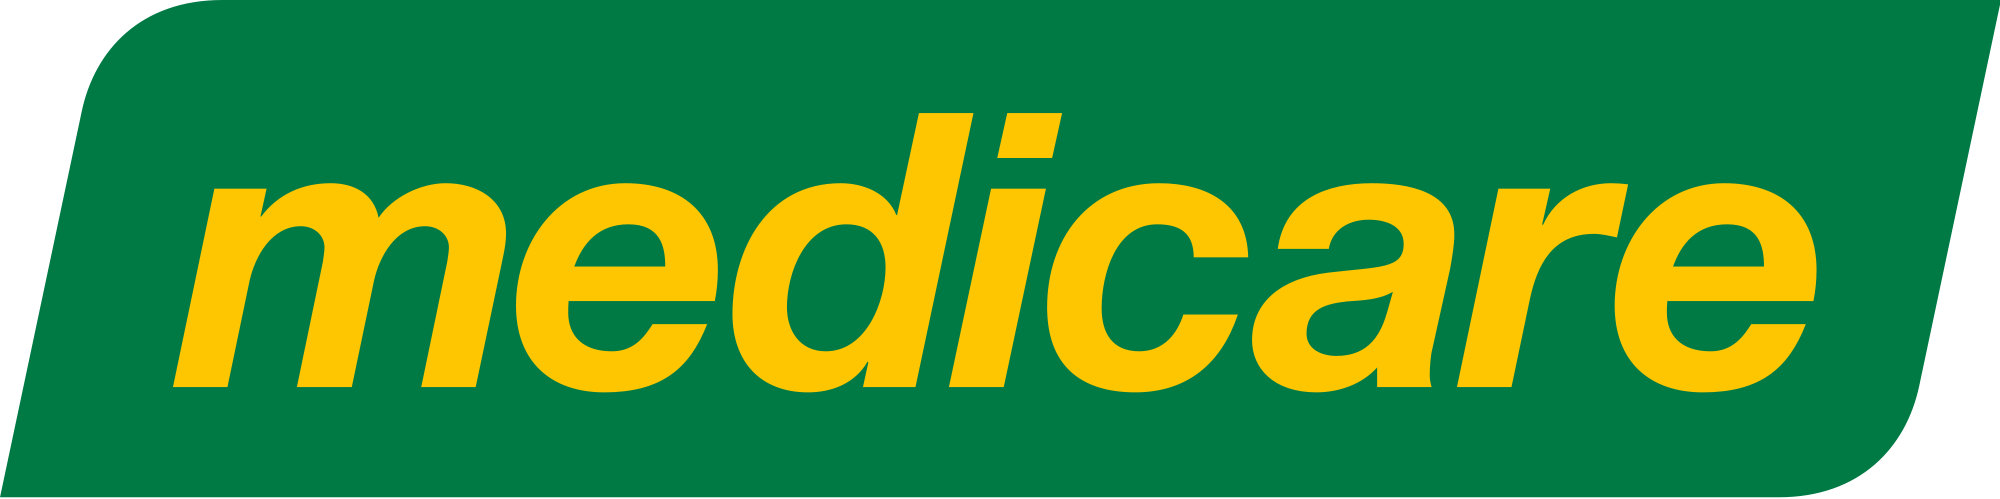 Medicare_Logo